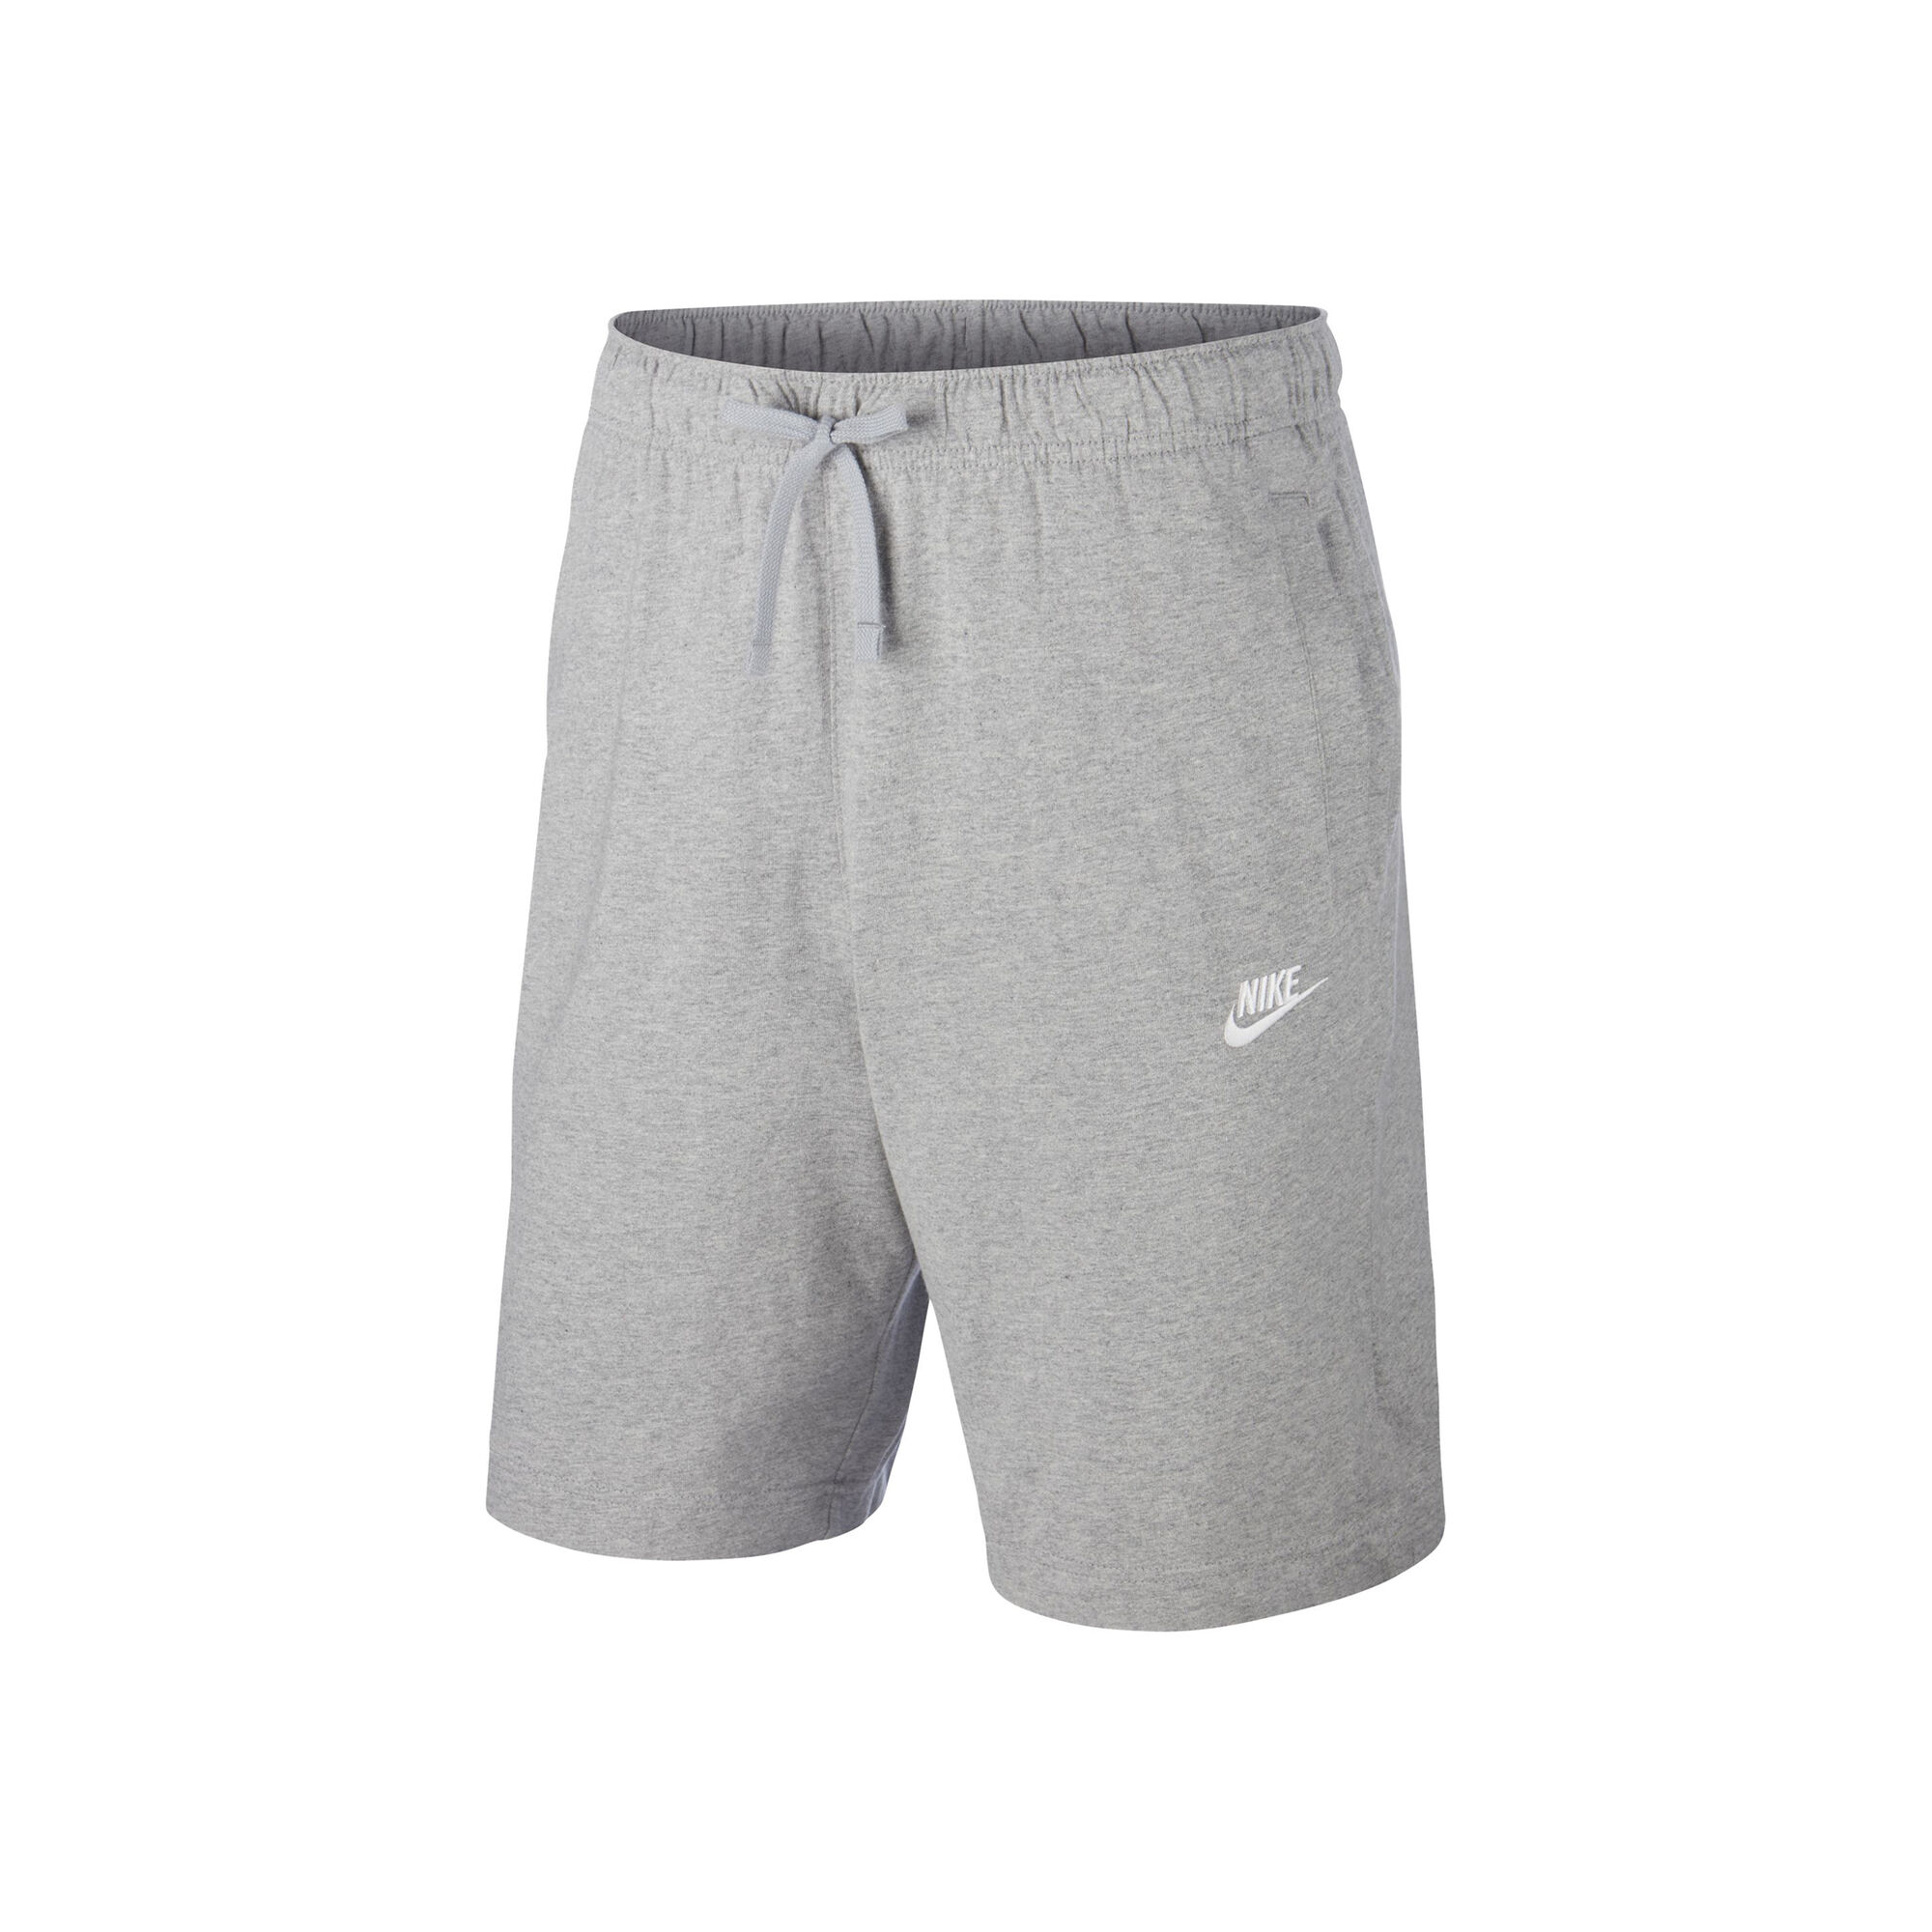 Nike Sportswear Club Shorts - Gris Claro, Blanco compra online | Tennis-Point